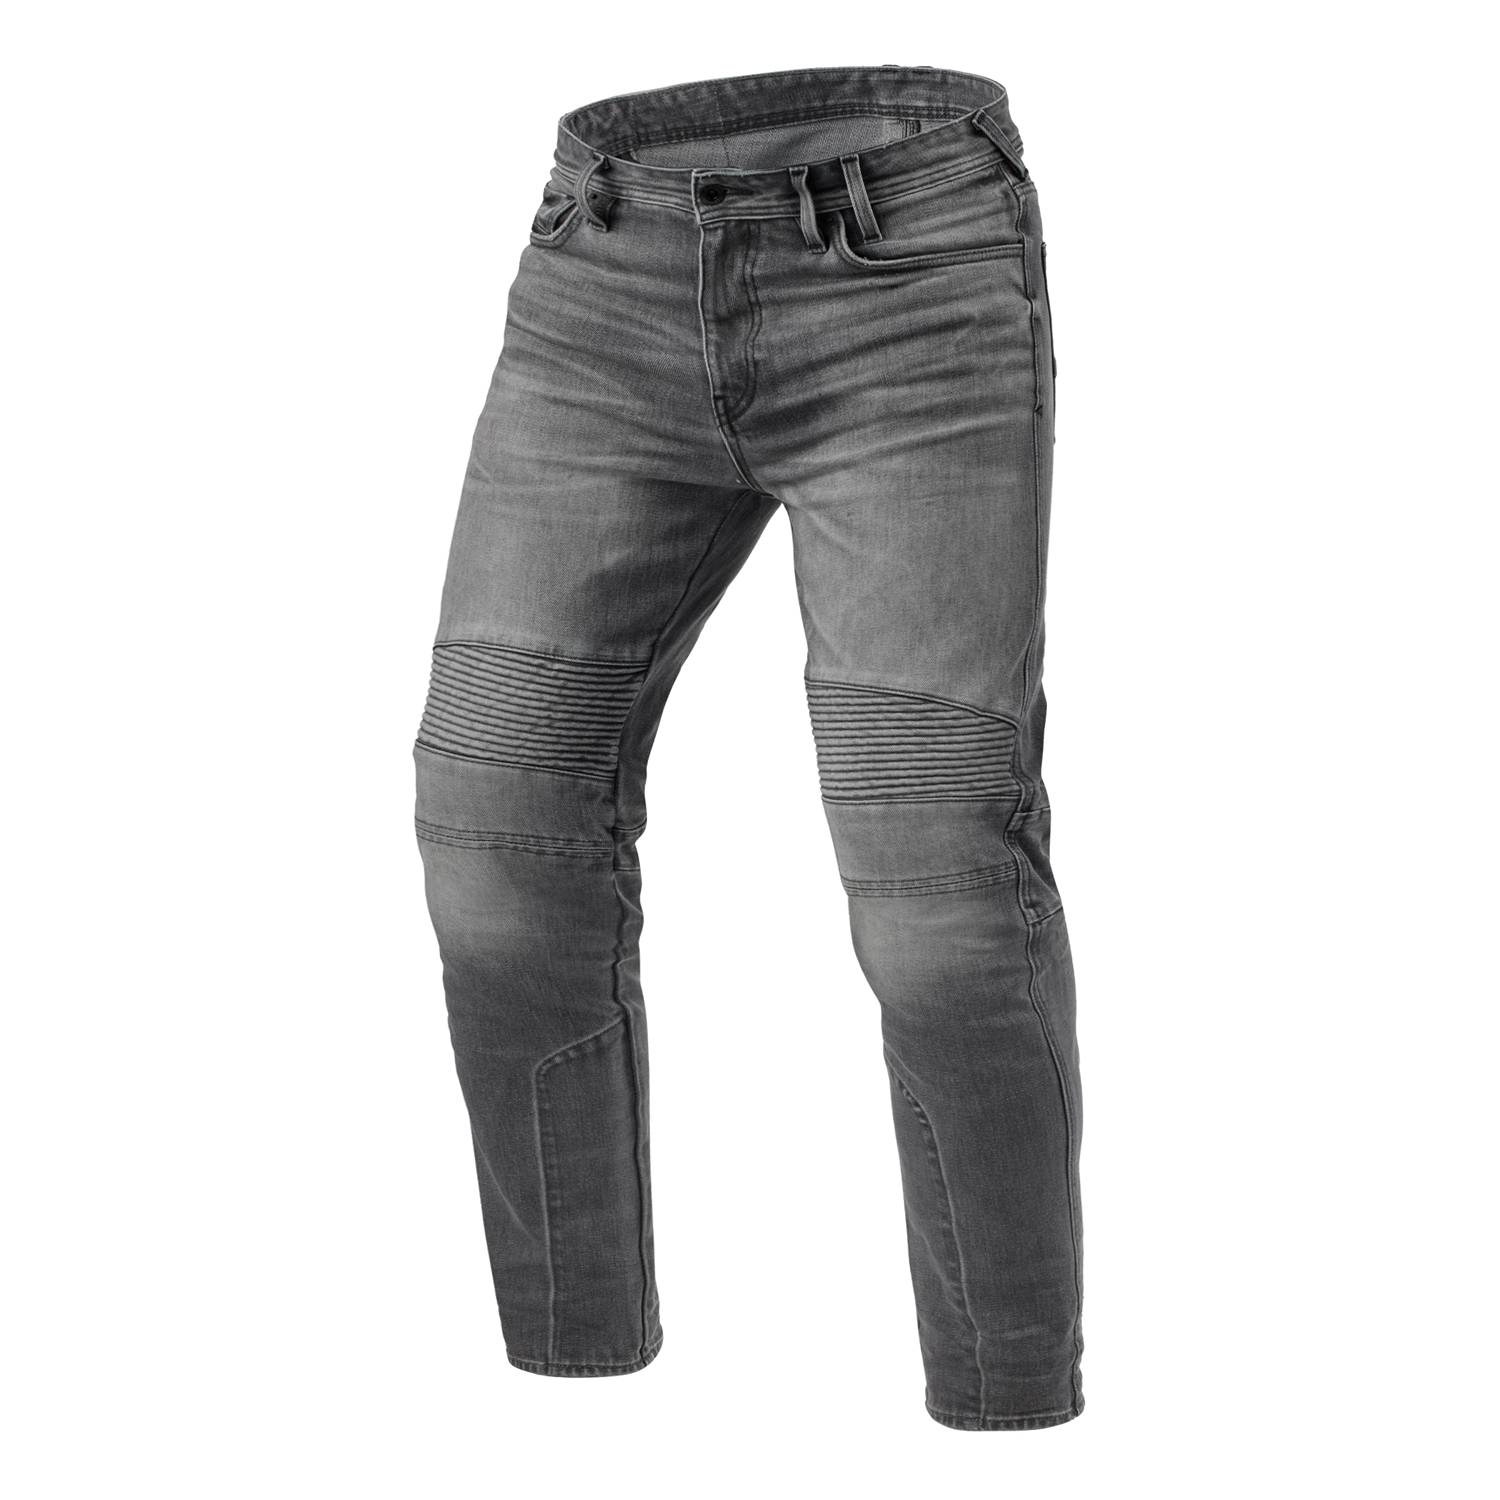 Image of REV'IT! Jeans Moto 2 TF Medium Grey Used L36 Motorcycle Jeans Size L36/W36 EN